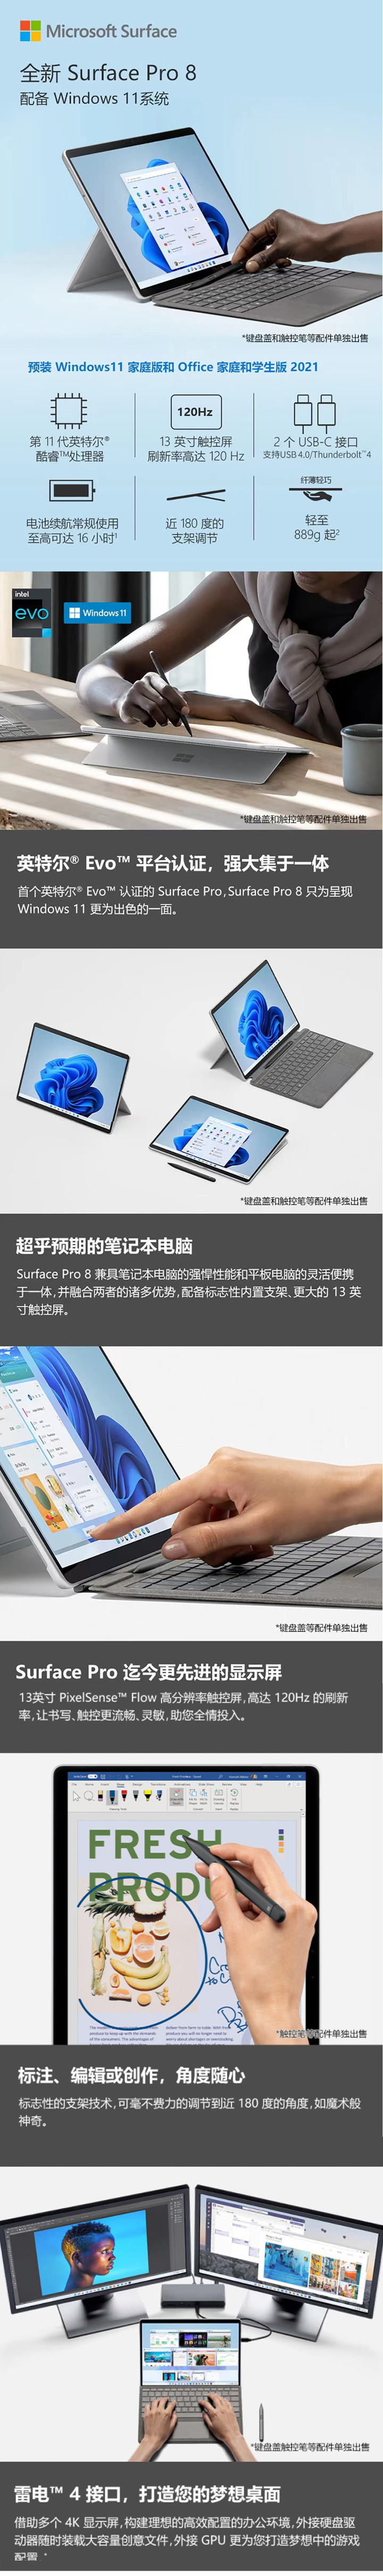 Surface Pro 8免费试用,评测